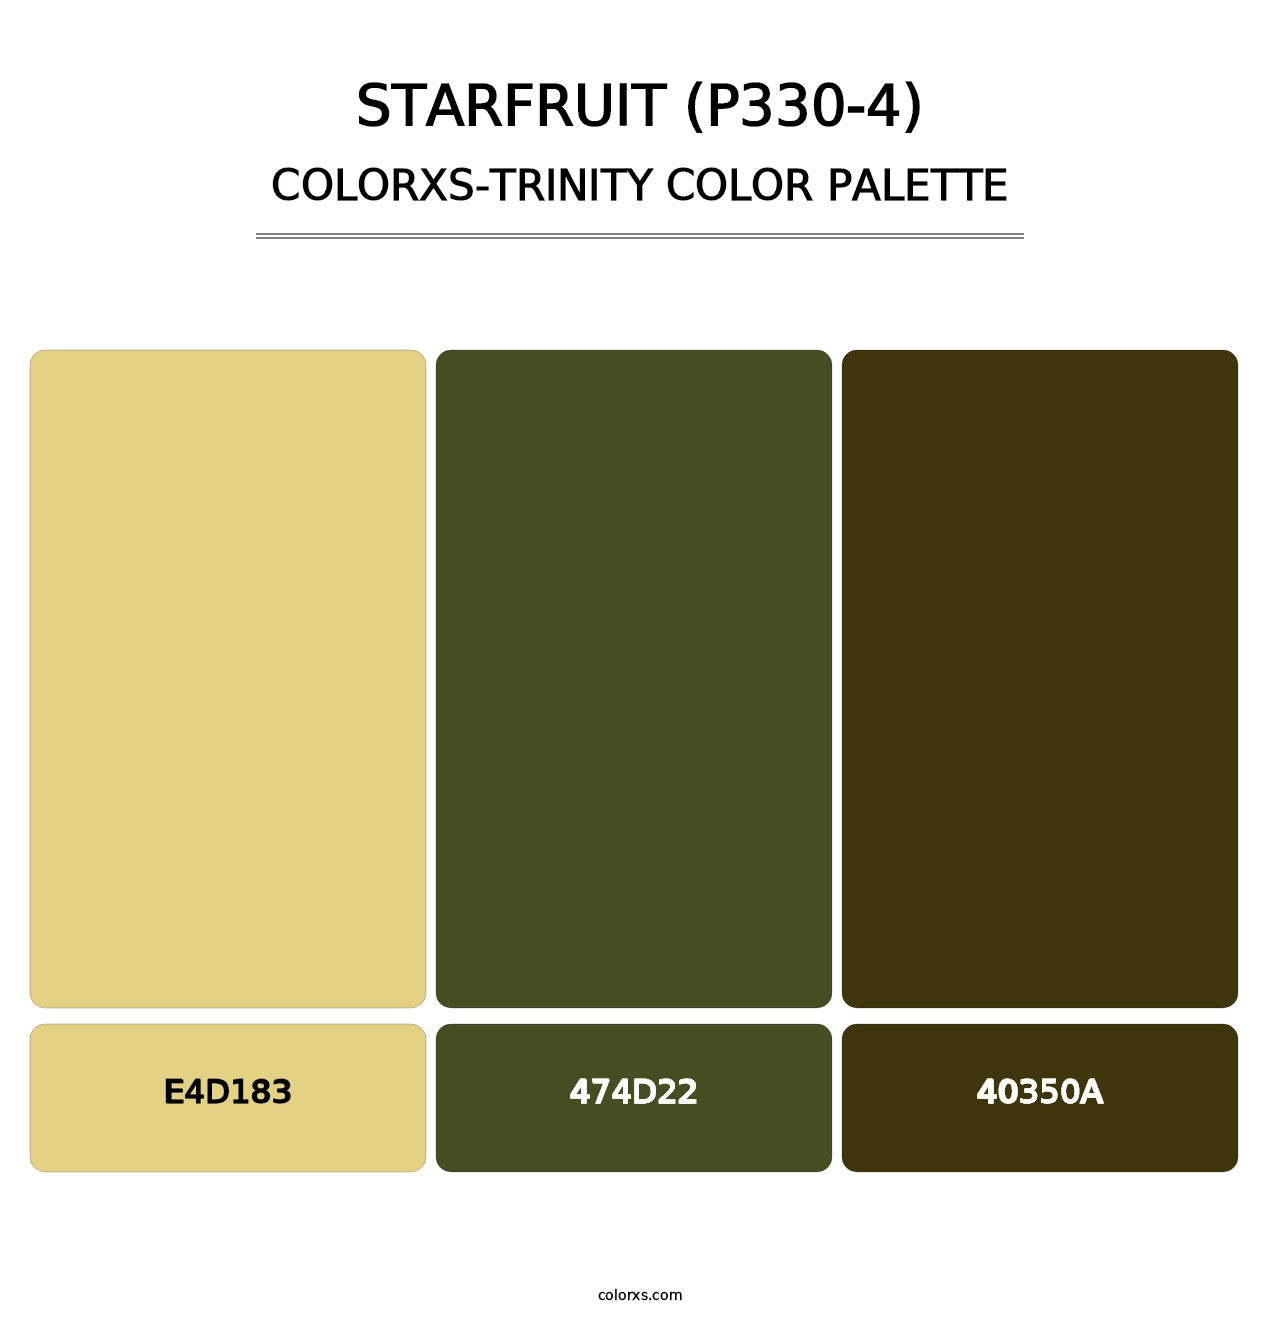 Starfruit (P330-4) - Colorxs Trinity Palette